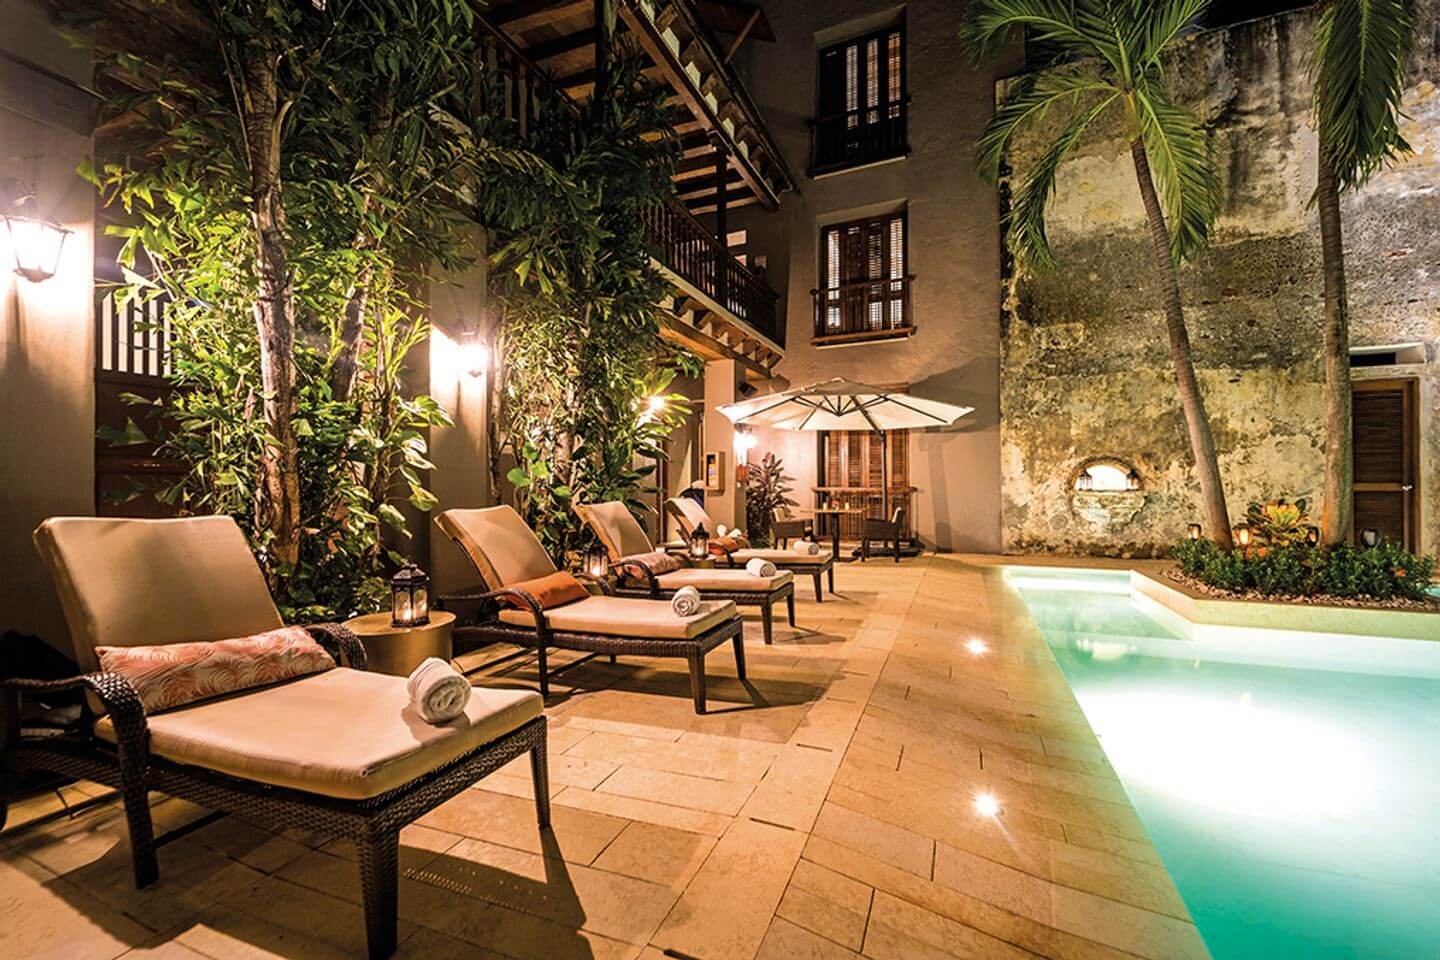 Pool side image of Hotel Anada, Cartagena